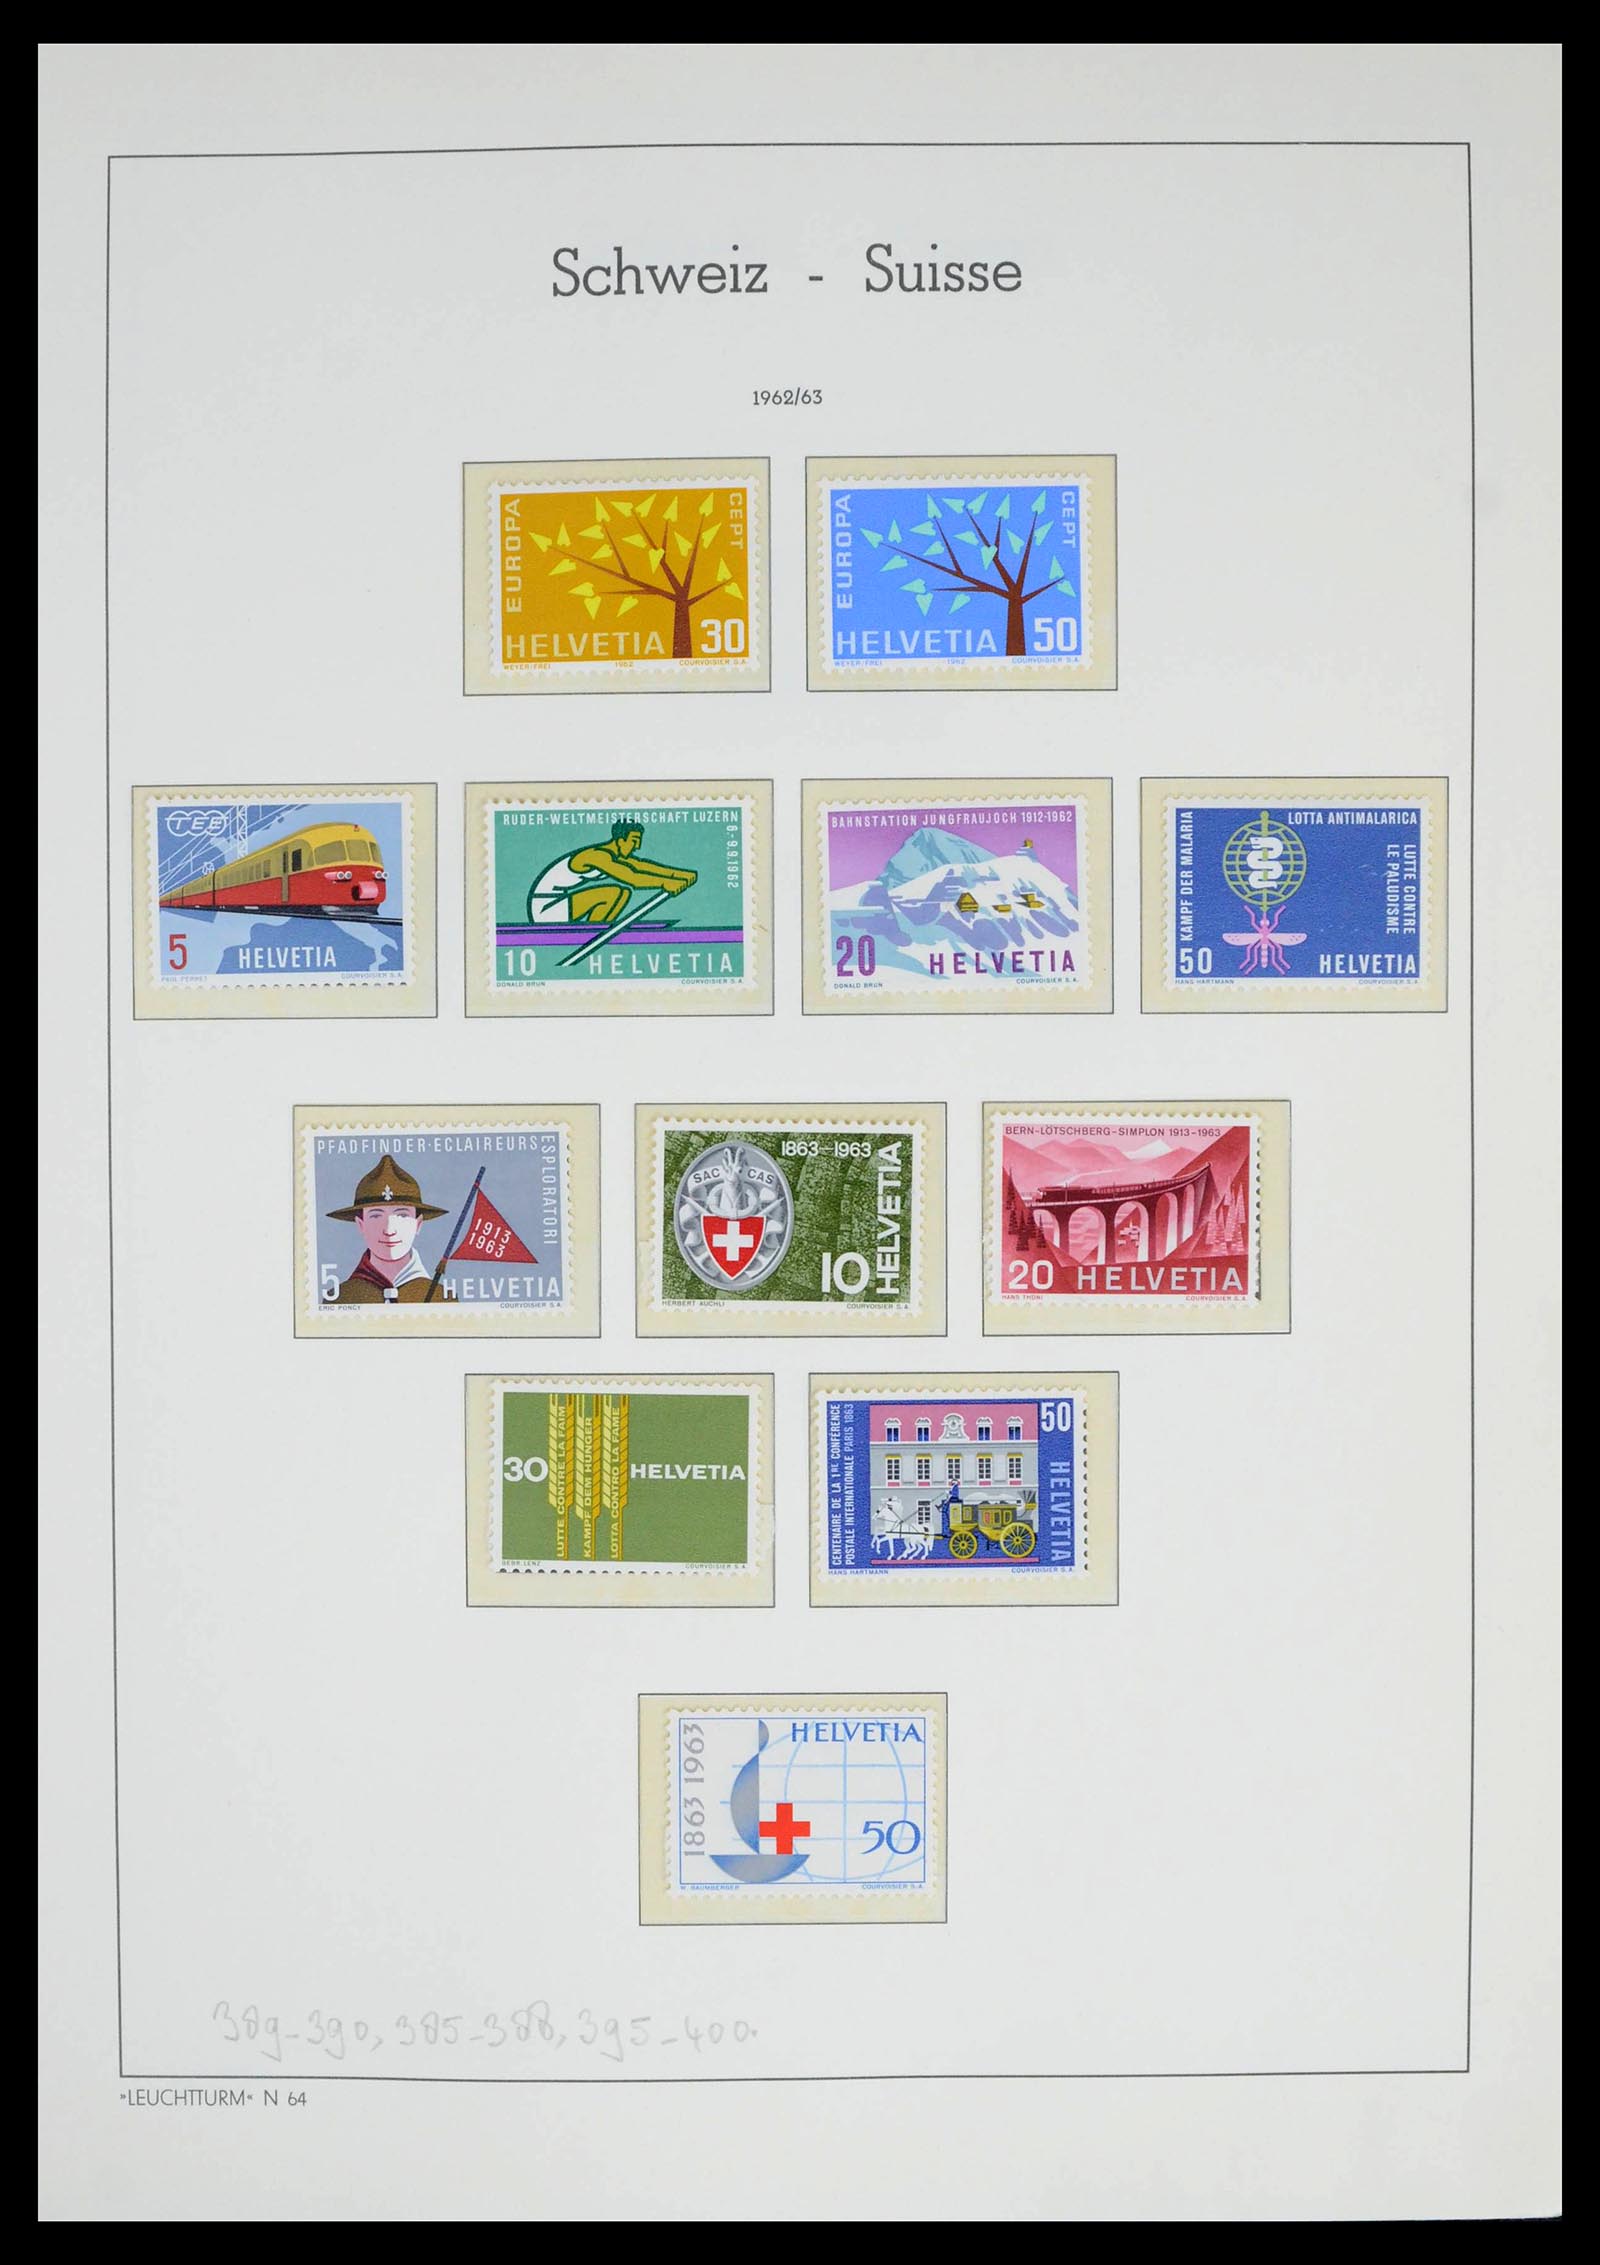 39420 0039 - Stamp collection 39420 Switzerland 1862-1974.